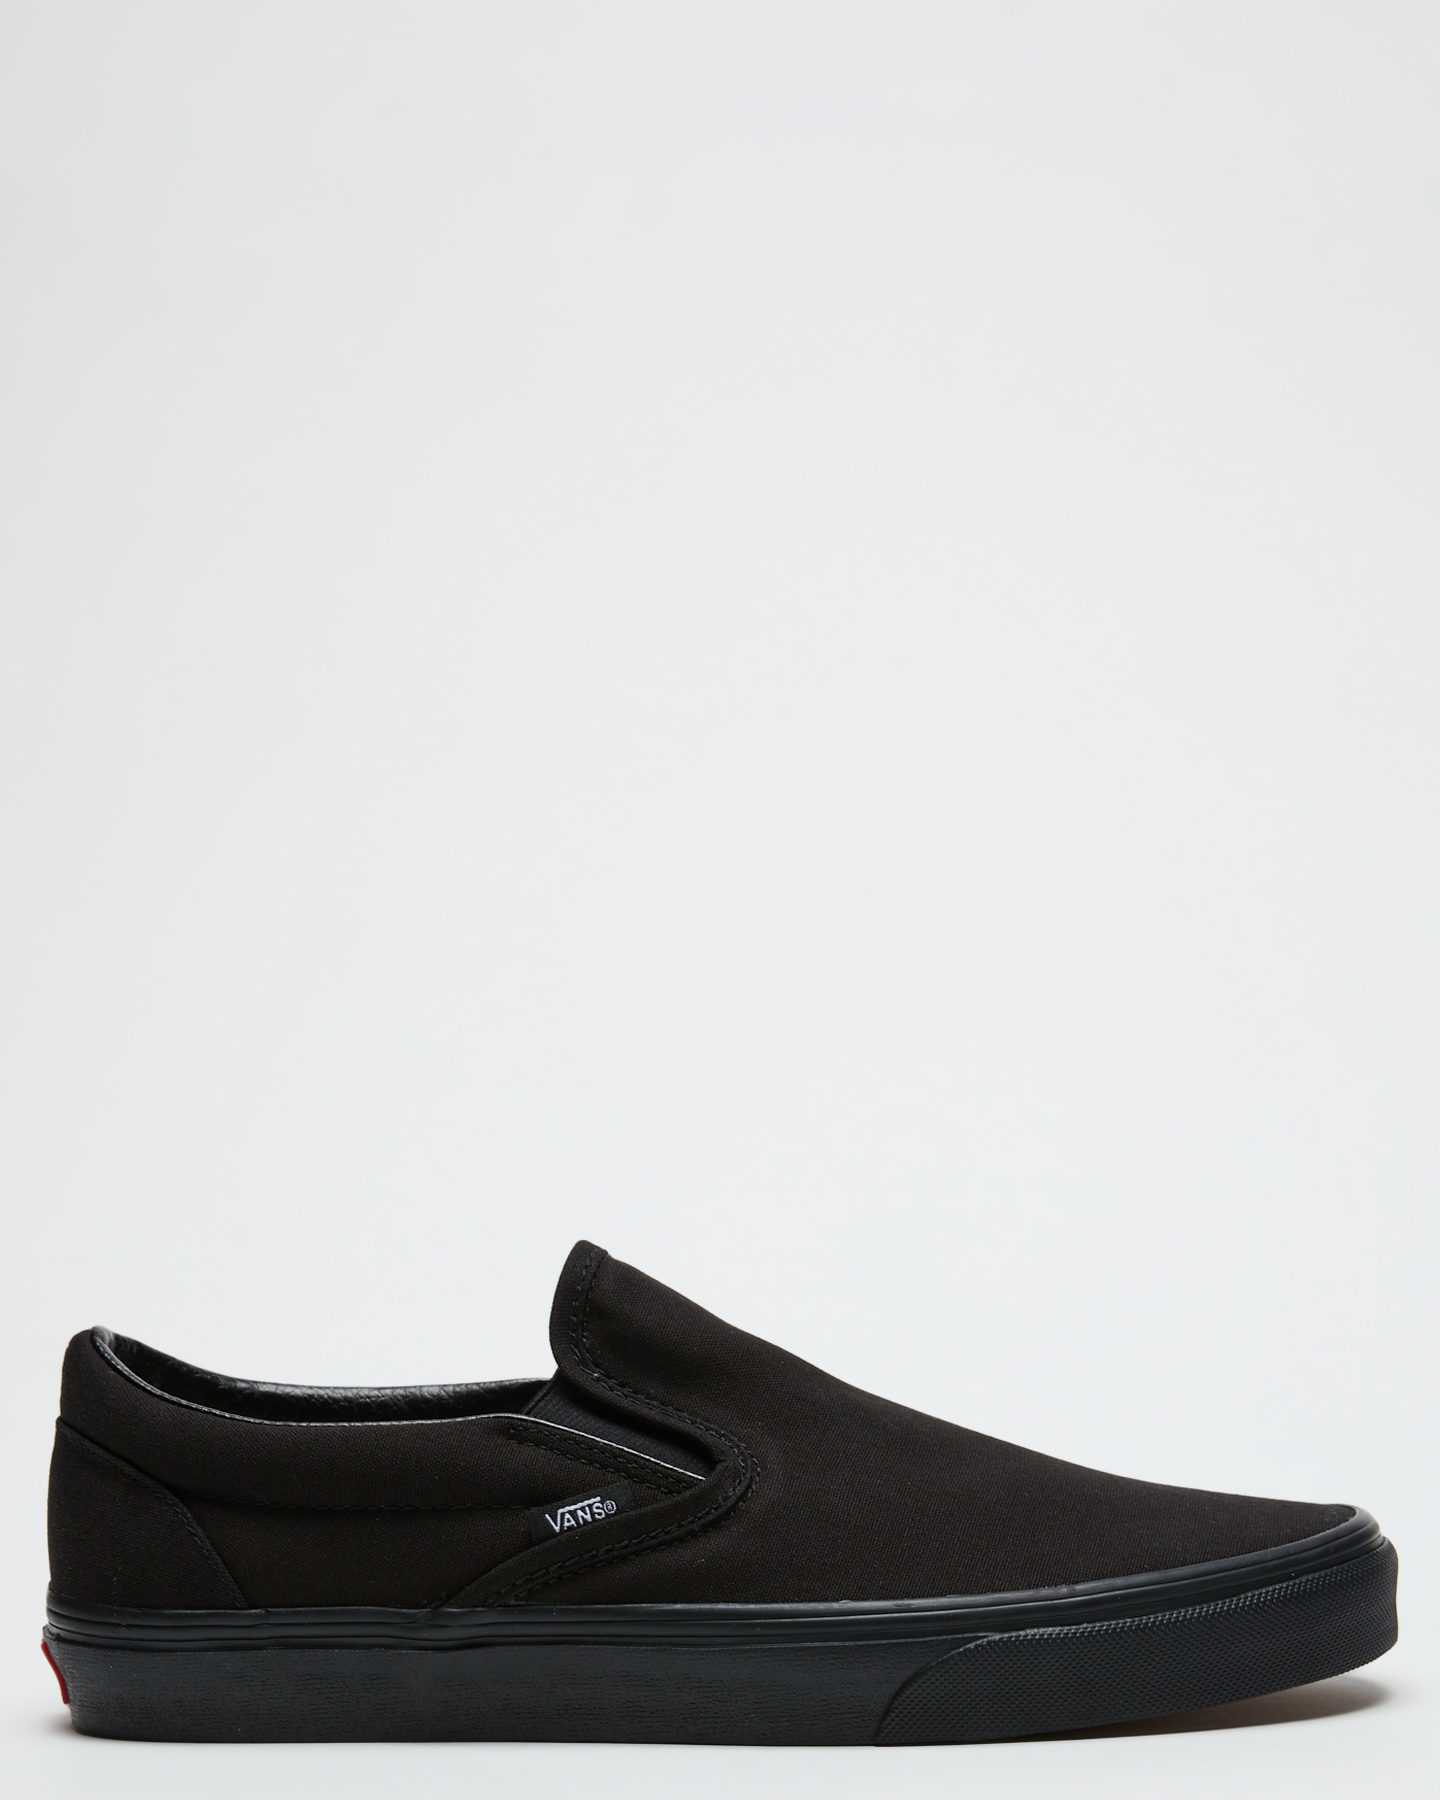 Vans Classic Slip On Shoe Black/Black | SurfStitch